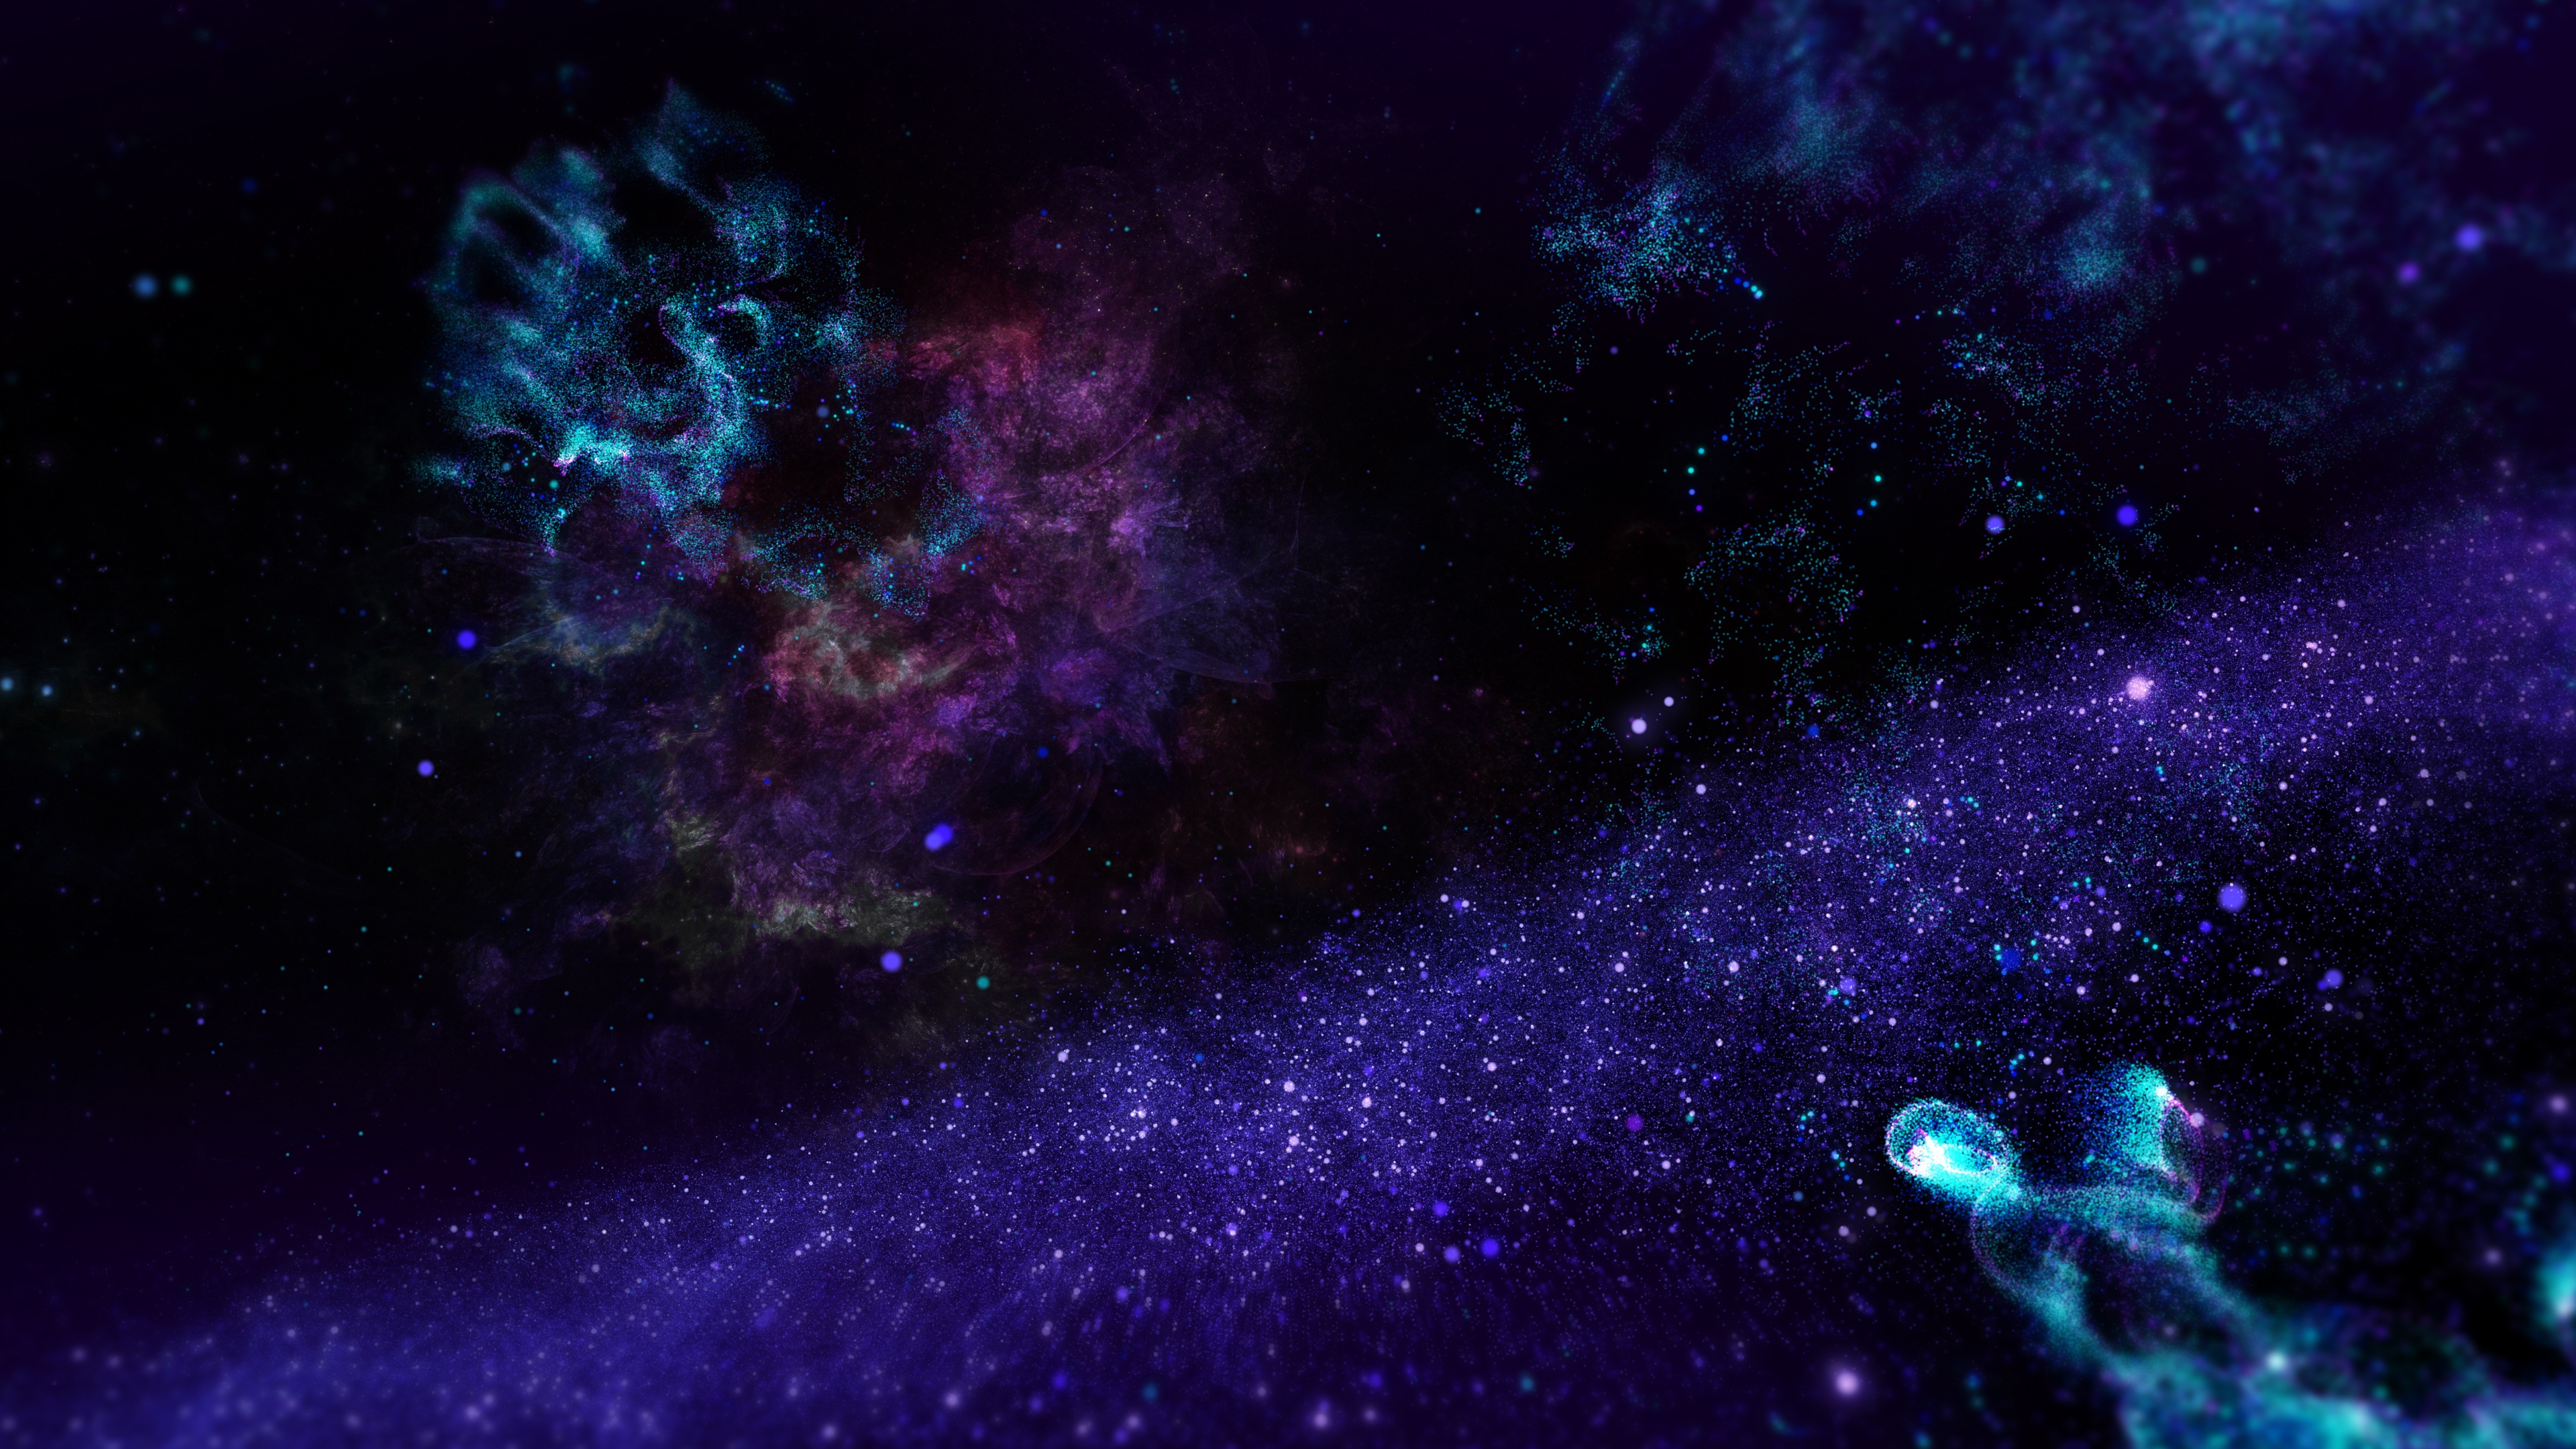 Download Cosmos, galaxy, space, dark, digital art wallpaper, 3840x 4K UHD 16: Widescreen